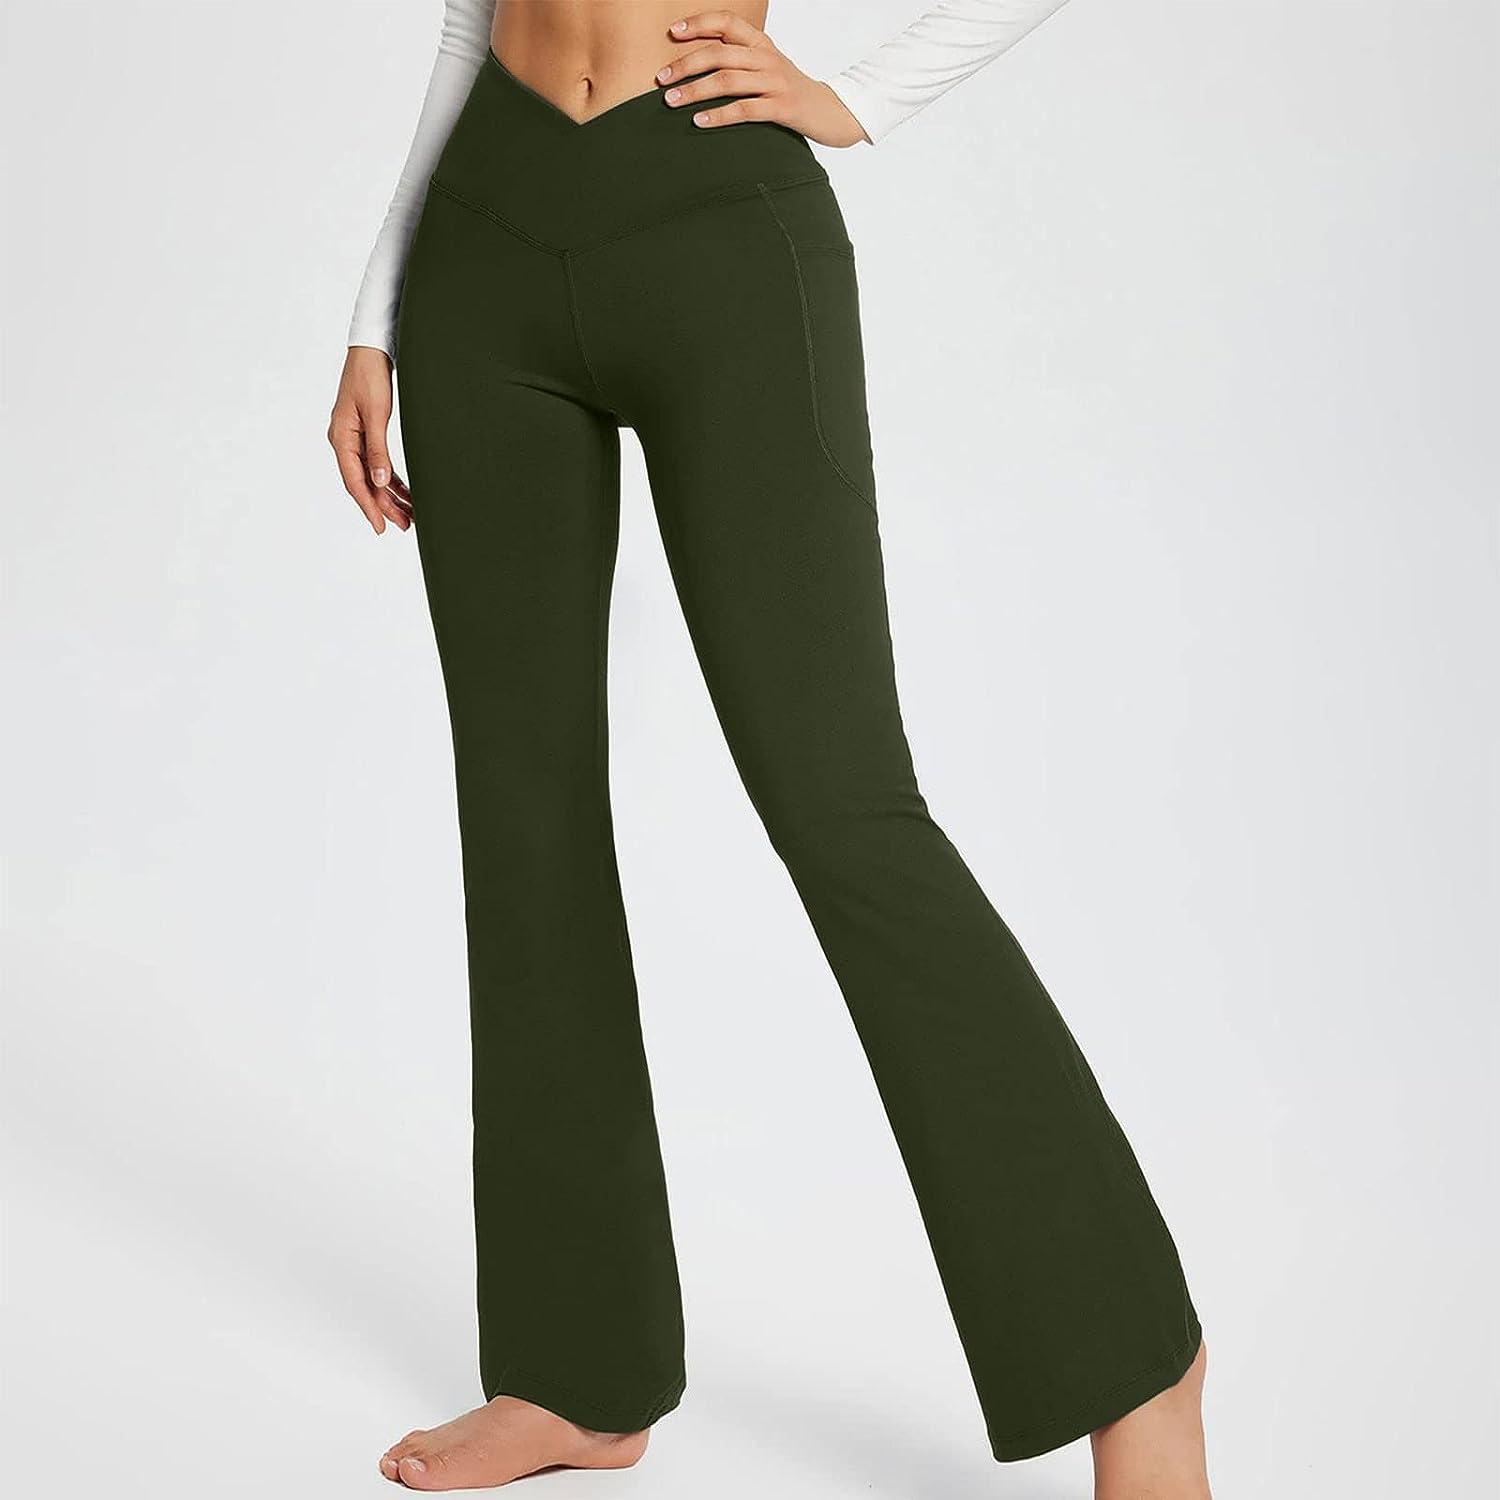 Bootcut Yoga Pants for Women Flare Bell Bottom Flair Yoga Pants